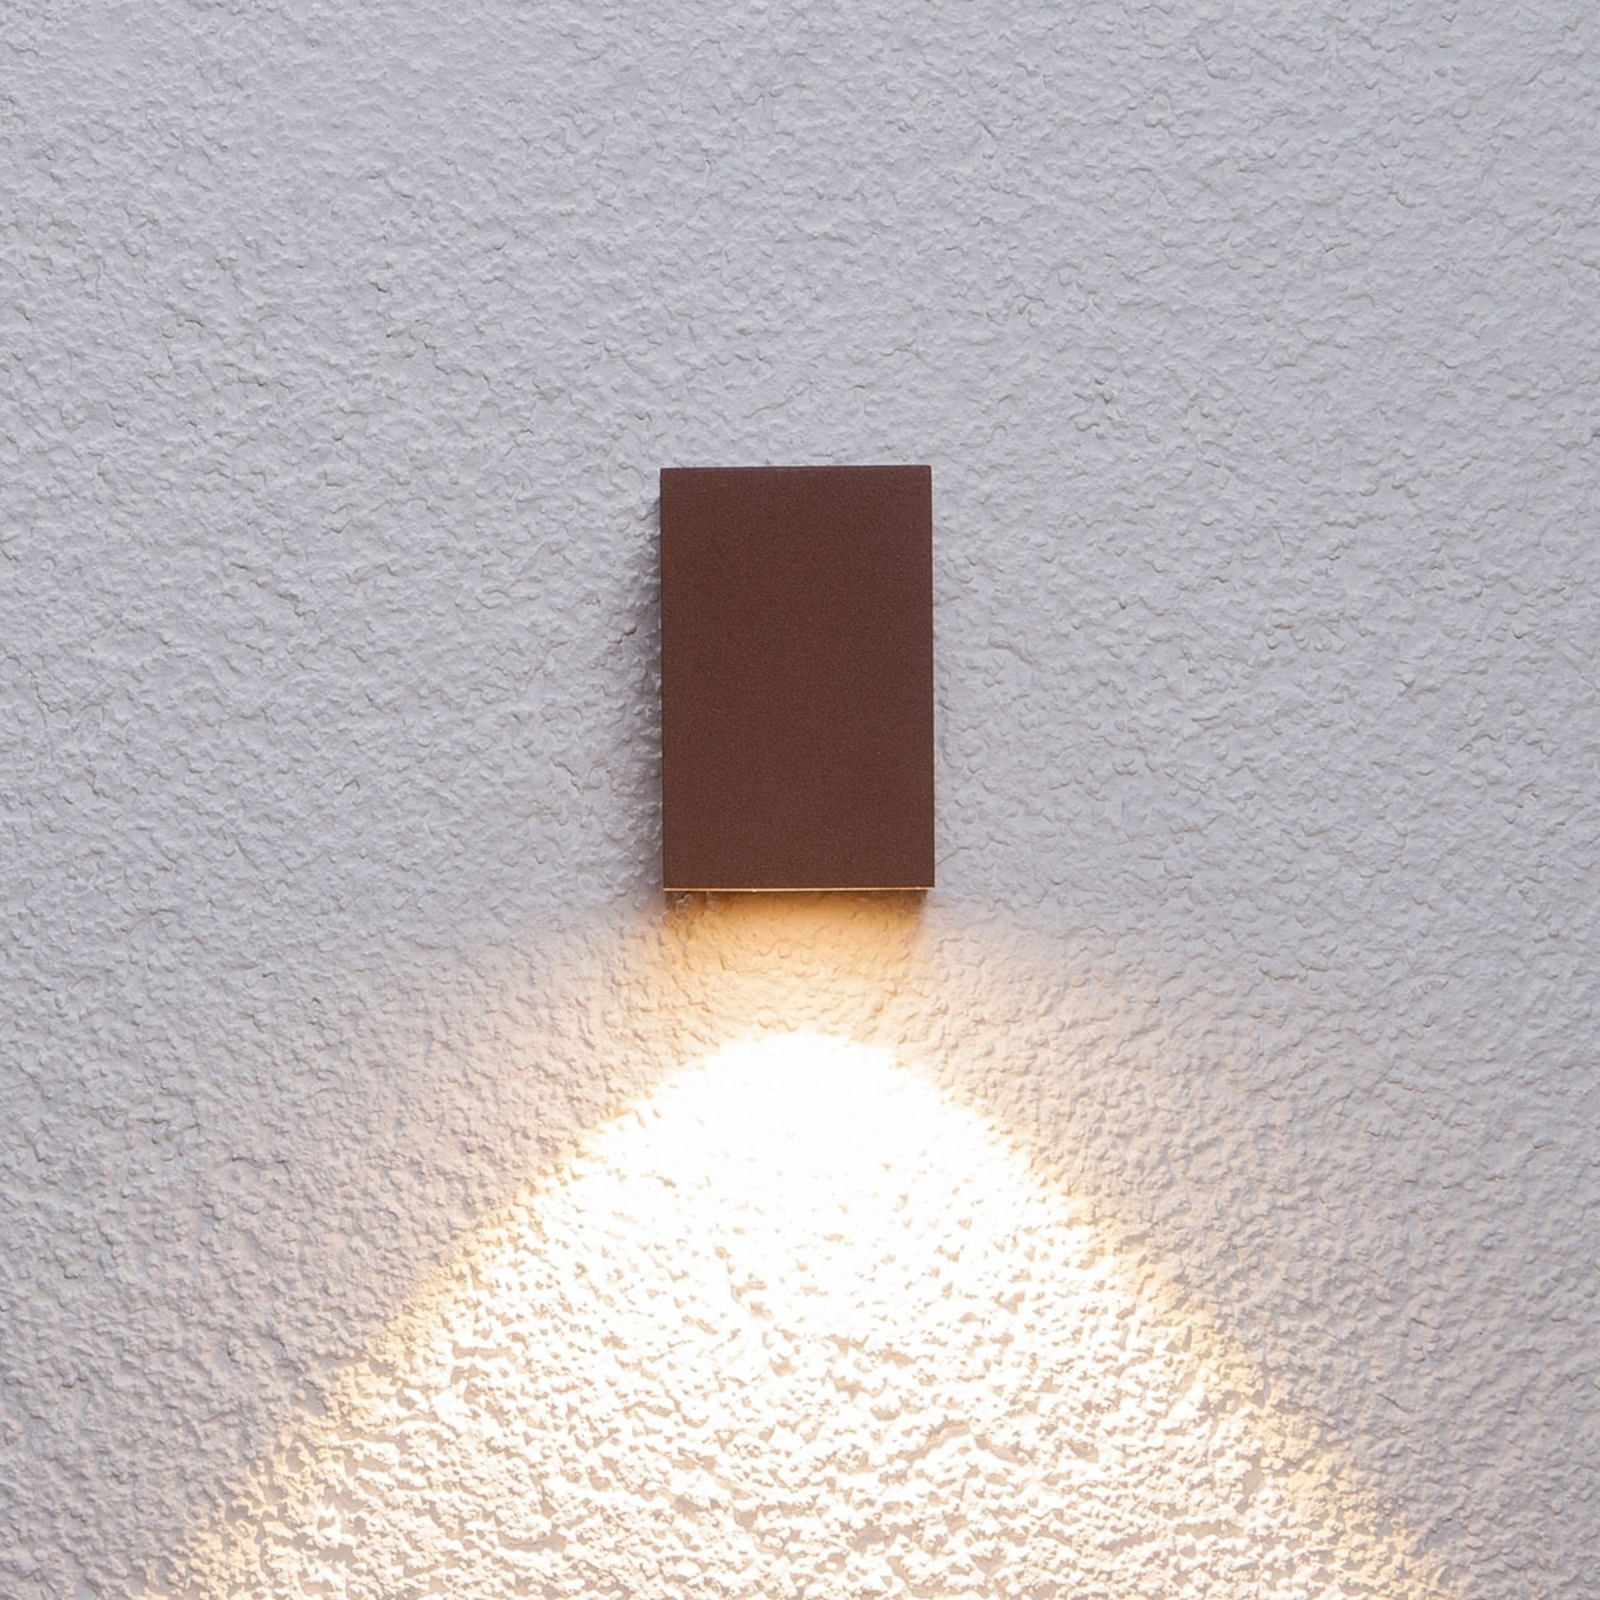 Roestbruine led-buitenwandlamp Tavi, 9,5 cm